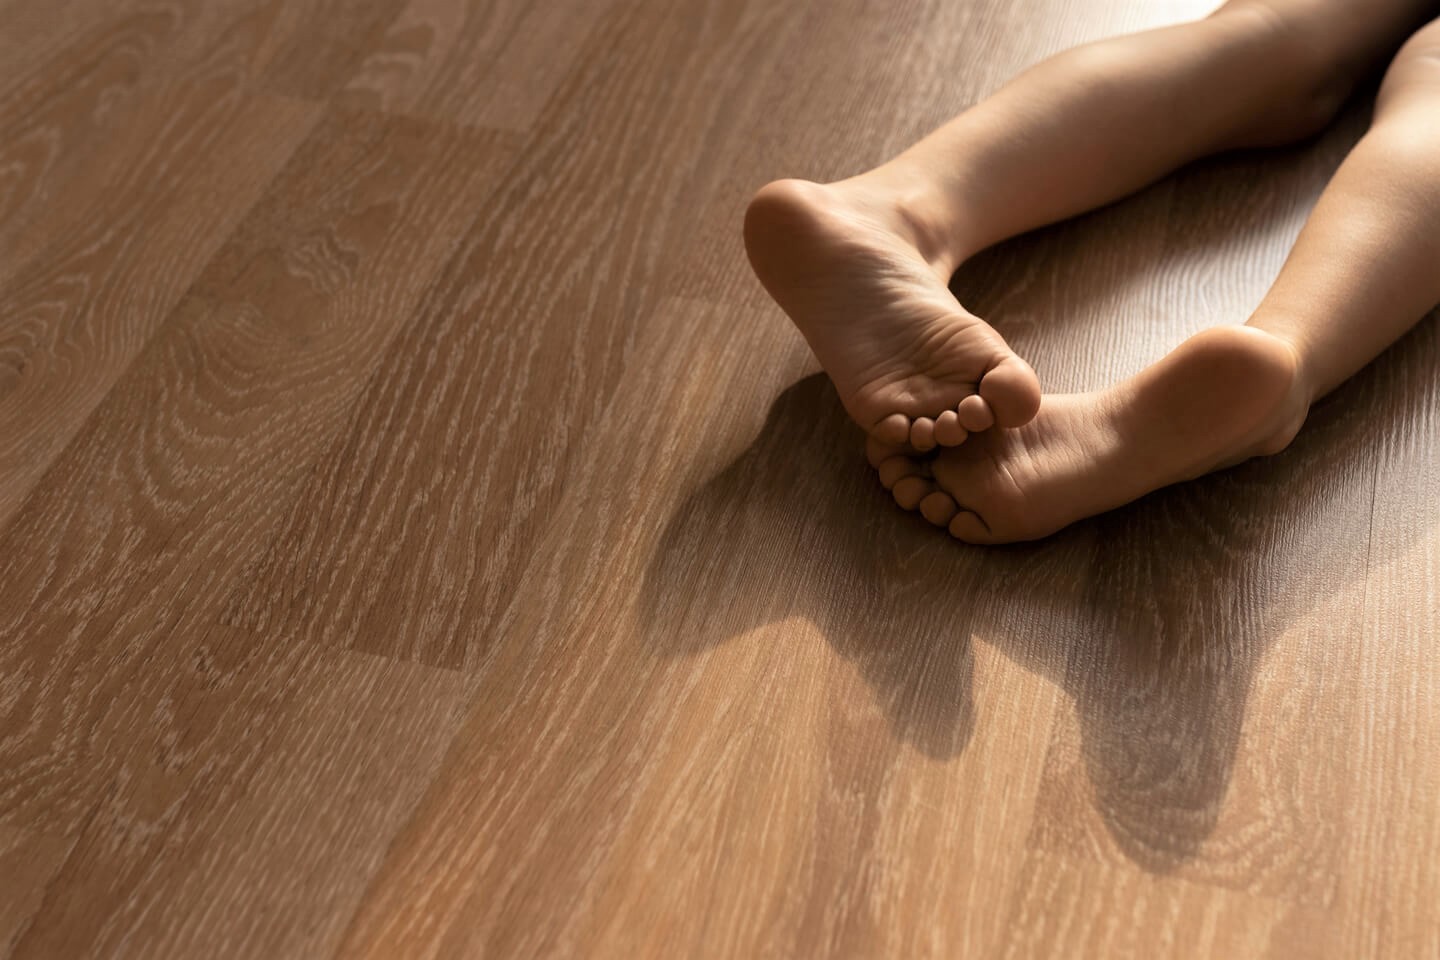 Little girls legs on a wooden floor